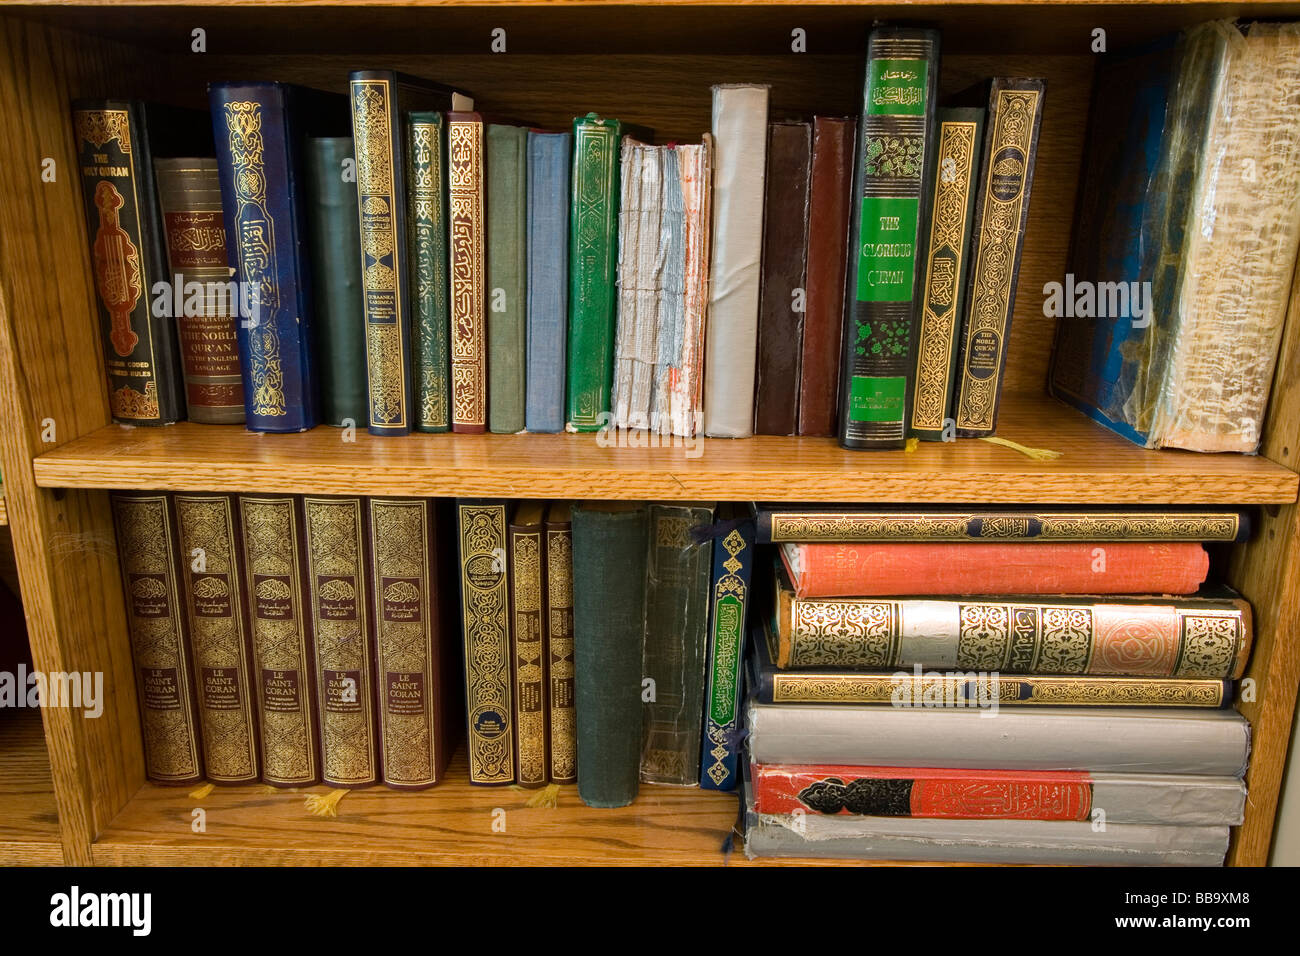 Islamic Foundation von Toronto - Bücherregal Stockfoto